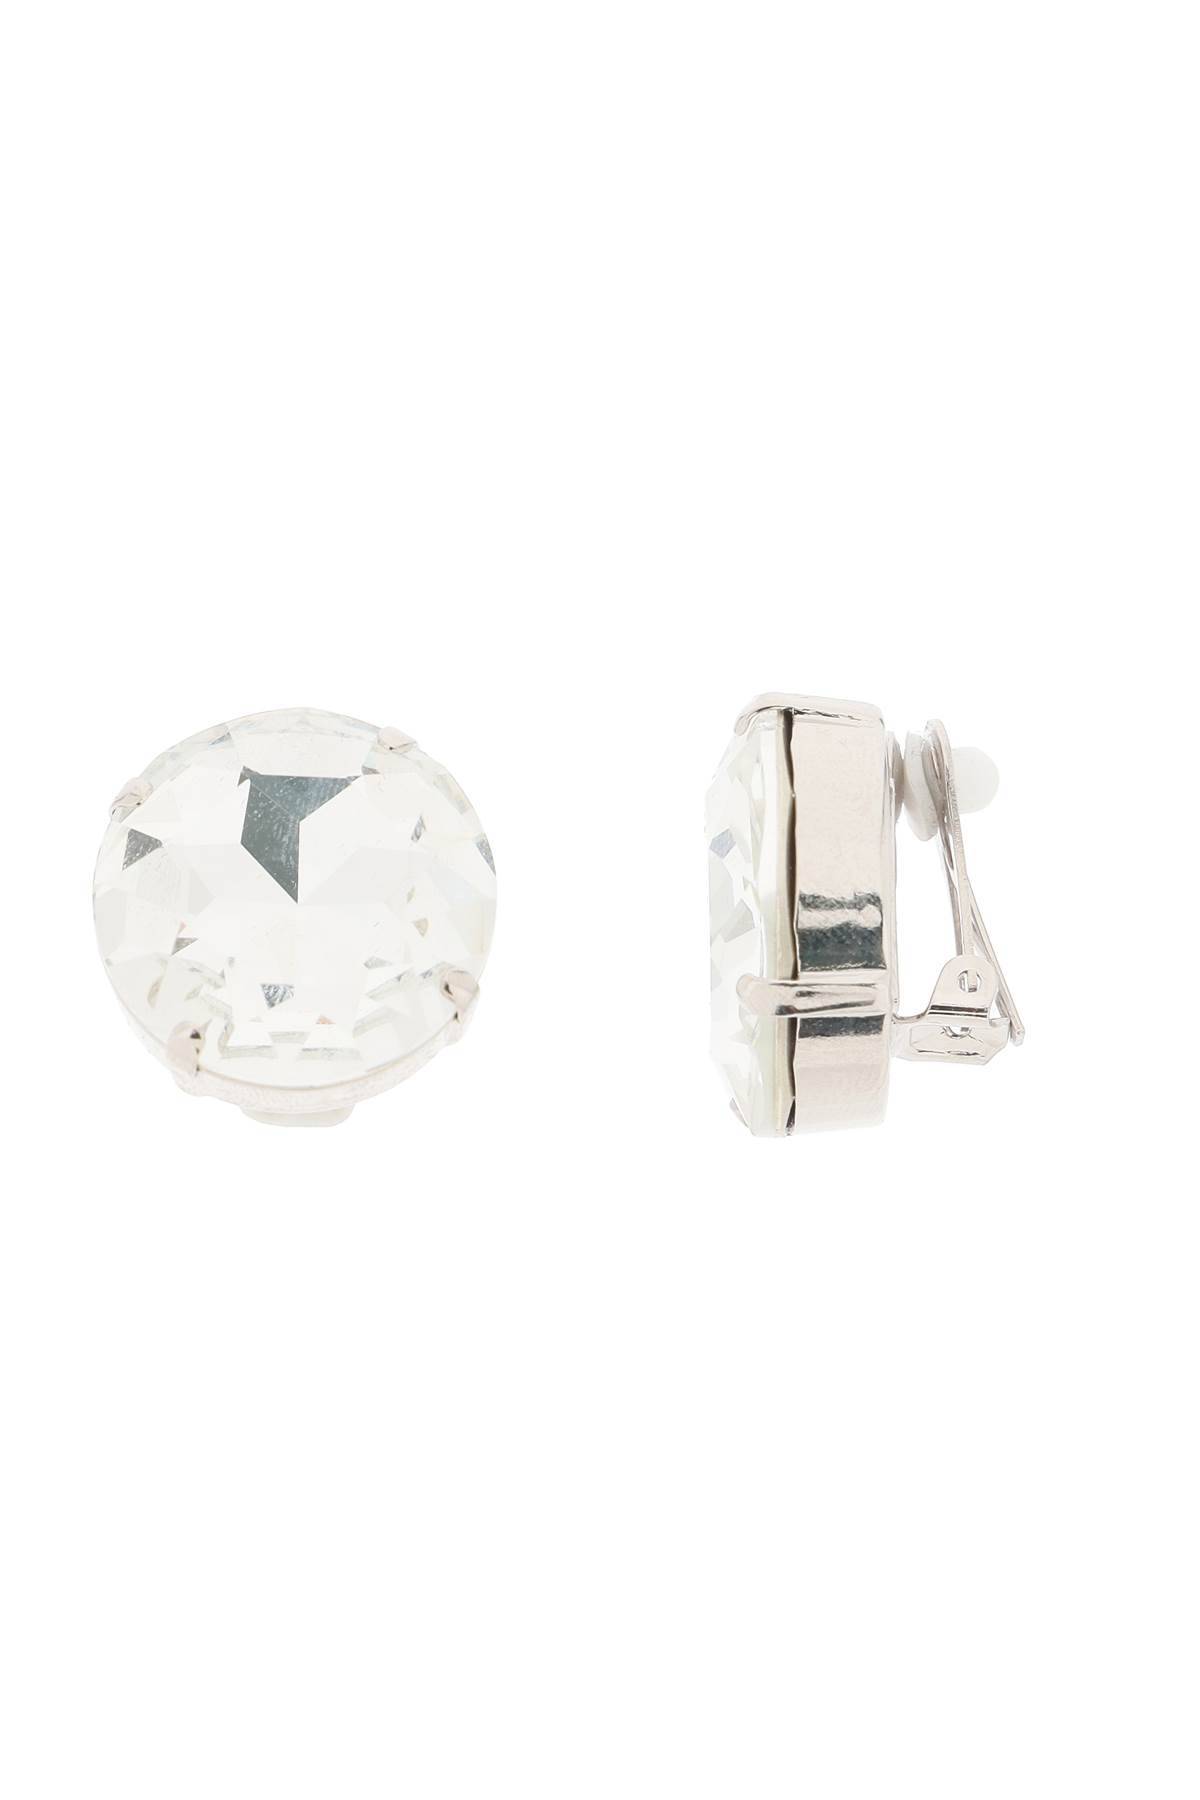 Alessandra Rich ALESSANDRA RICH crystal clip-on earrings in italian style